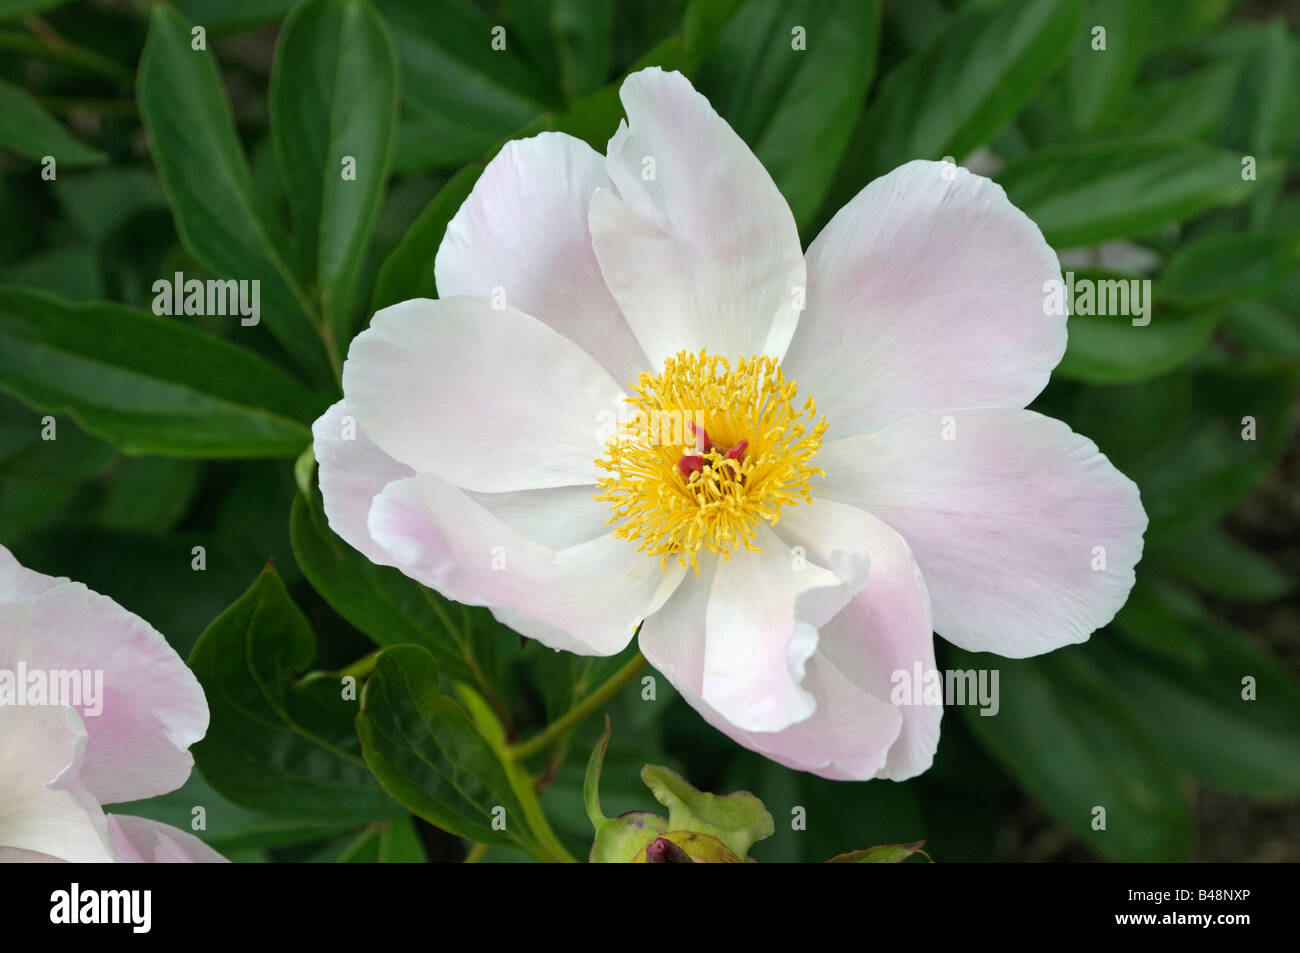 Weiße Paeony, gemeinsamen Garten Paeony, chinesische Paeony (Paeonia Lactiflora), Sorte: Nymphe, Blume Stockfoto